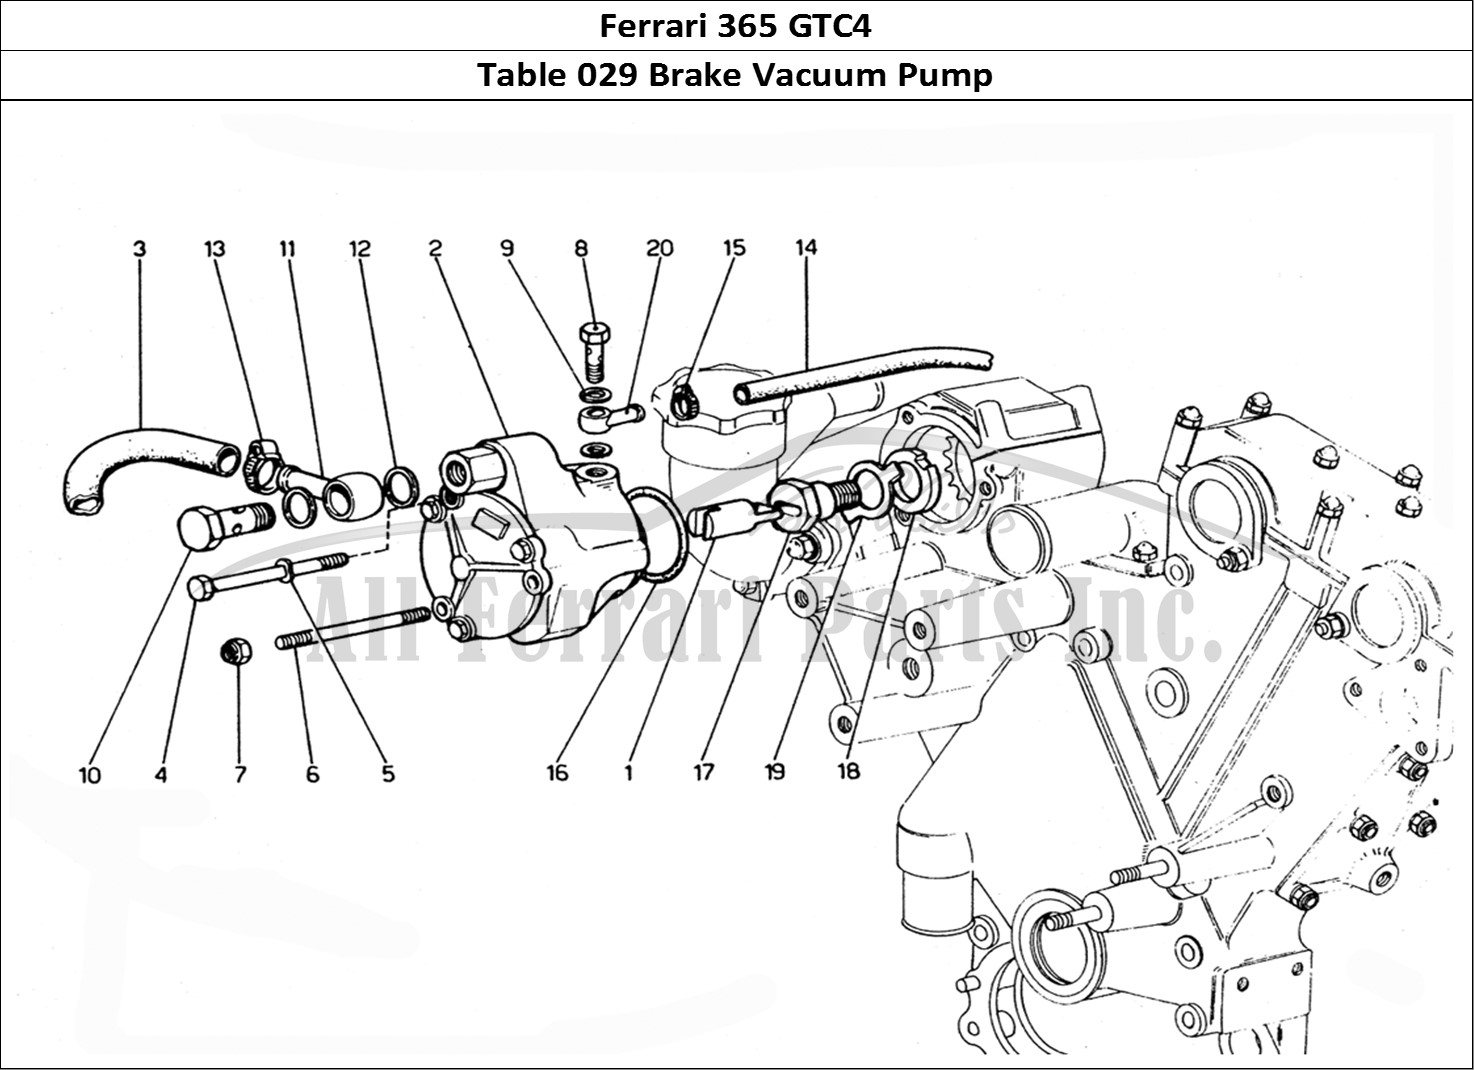 Ferrari Parts Ferrari 365 GTC4 (Mechanical) Page 029 Brake vacum pump